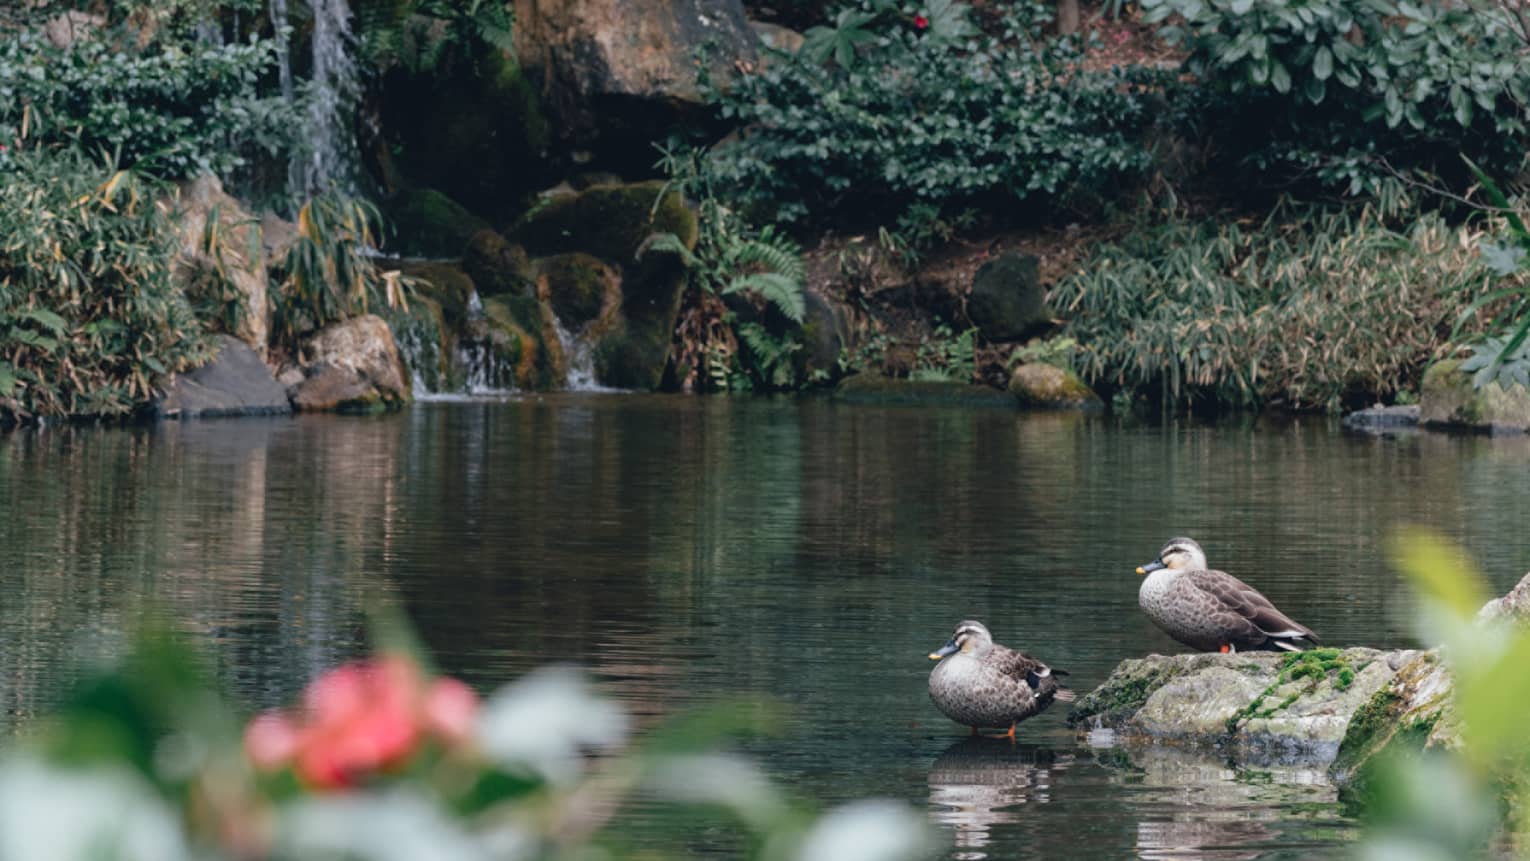 Two female mallard ducks sit pondside